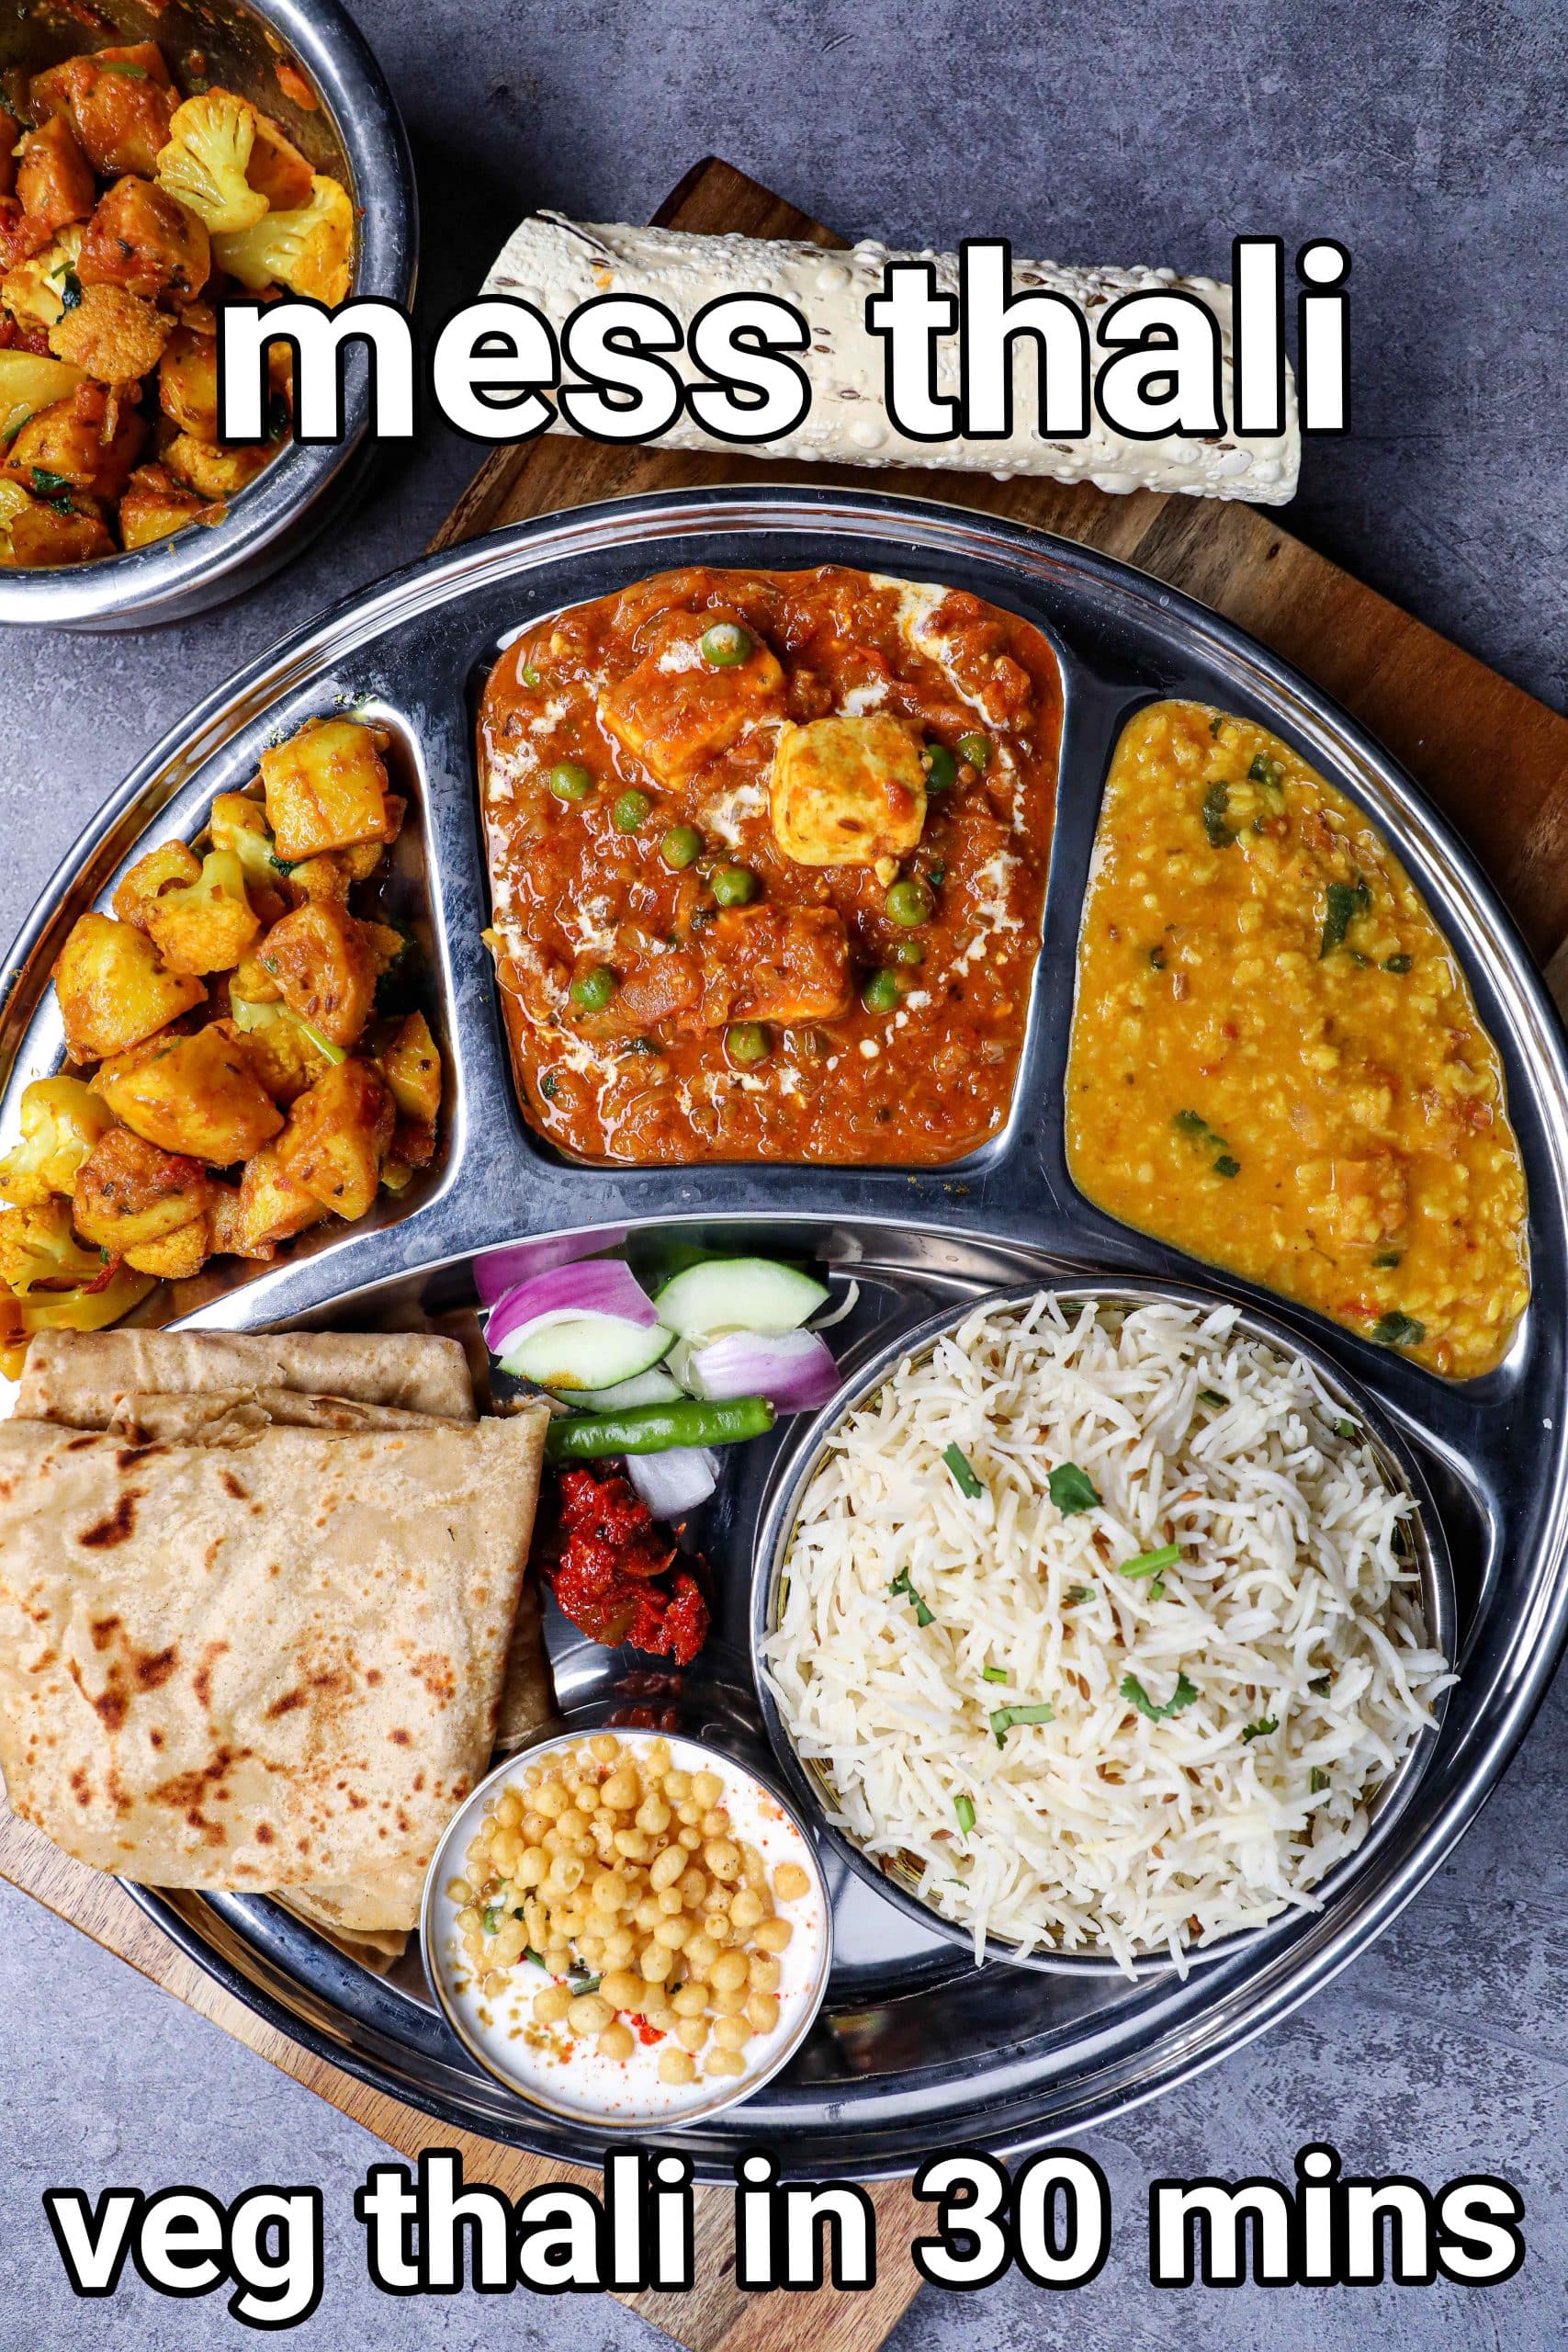 Indian kadai, thali, serving bowls & dishes, Concept Cuisine